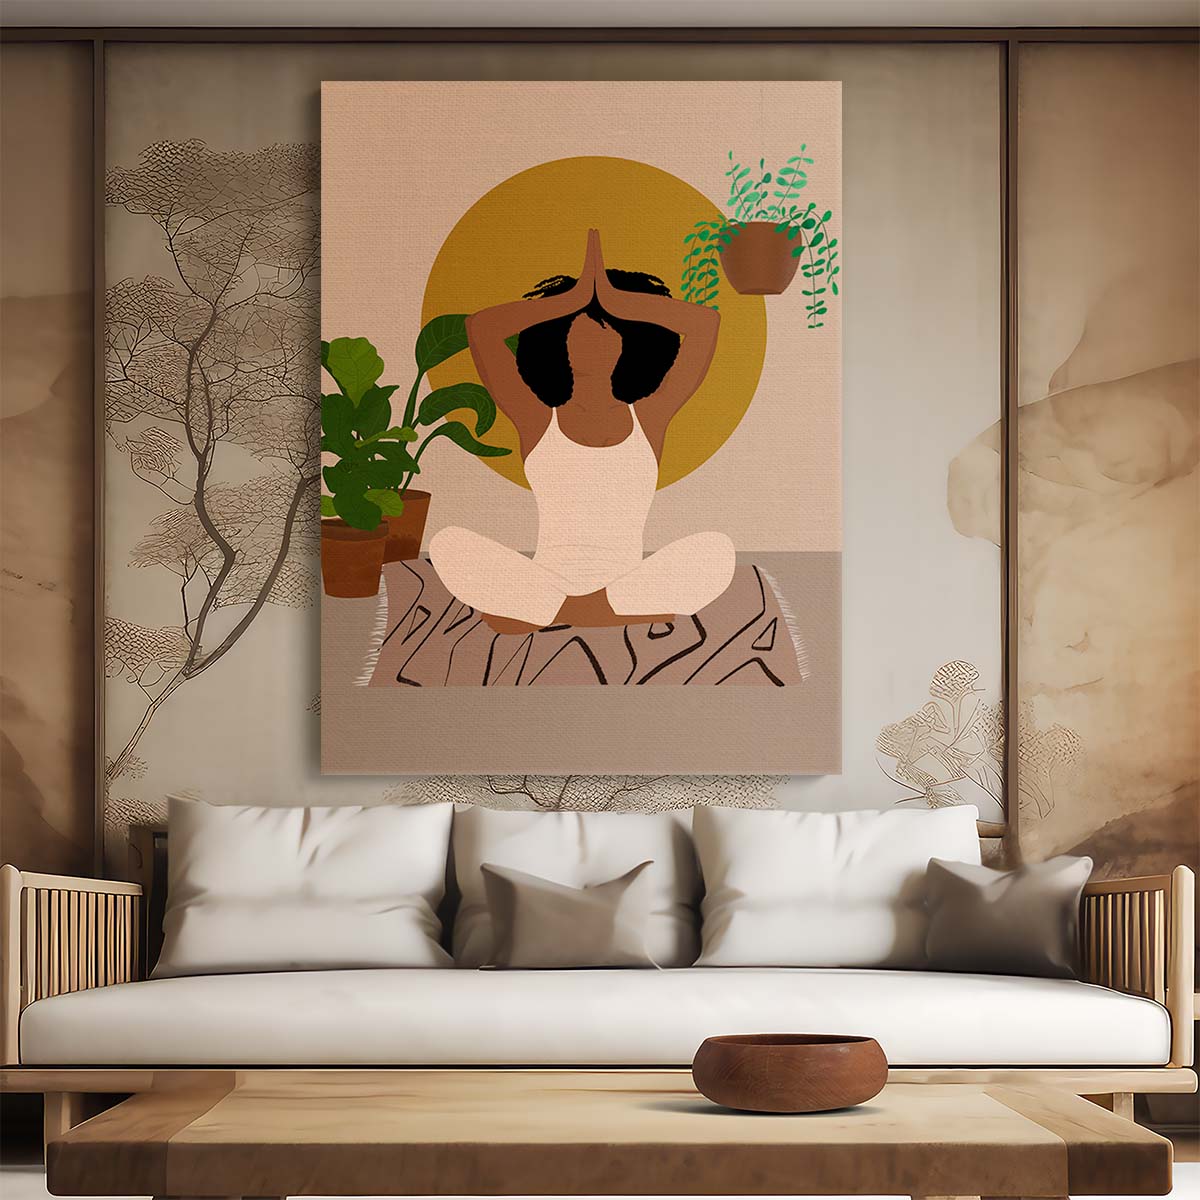 Spiritual Woman Meditating in Serene Botanical Zen Illustration Art by Luxuriance Designs, made in USA